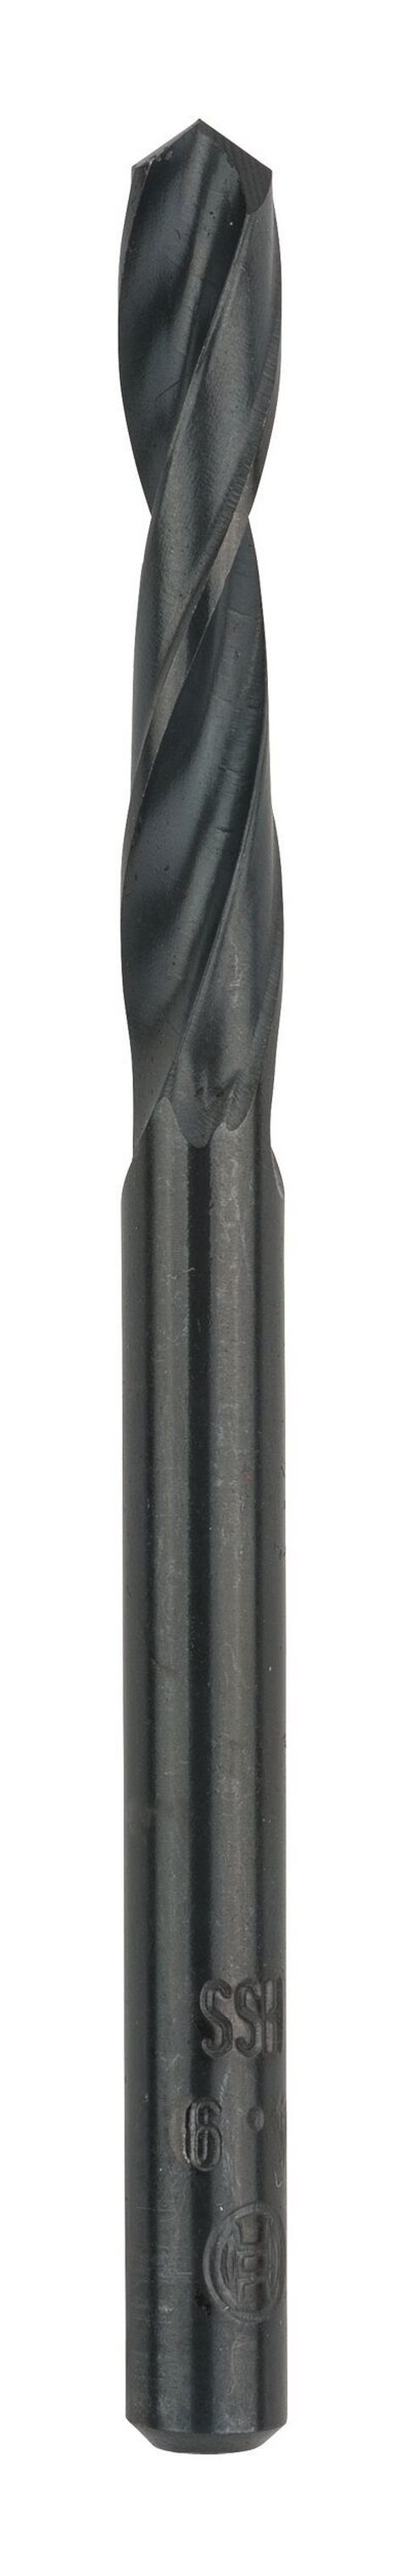 BOSCH Metallbohrer, (10 Stück), HSS-R - 1897) 4,9 x Karosseriebohrer - 62 mm 10er-Pack 26 x (DIN